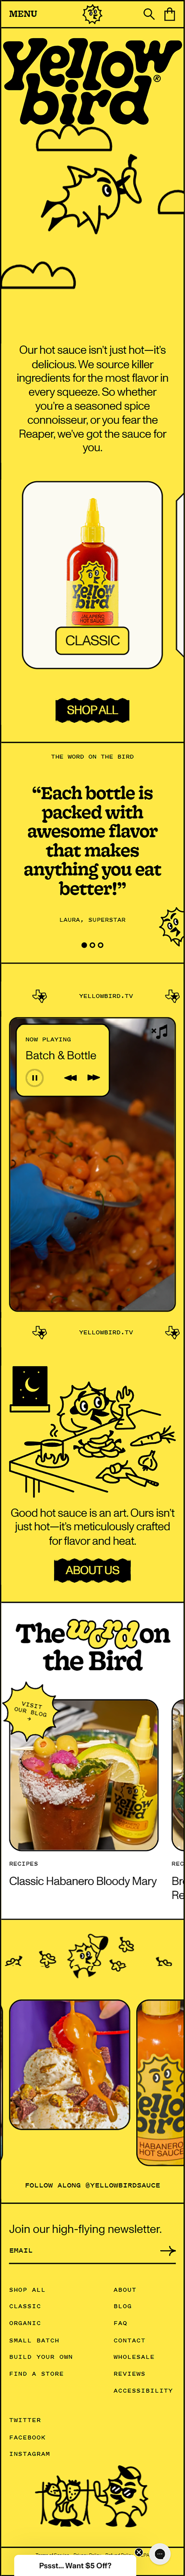 yellowbirdfood_sp_1